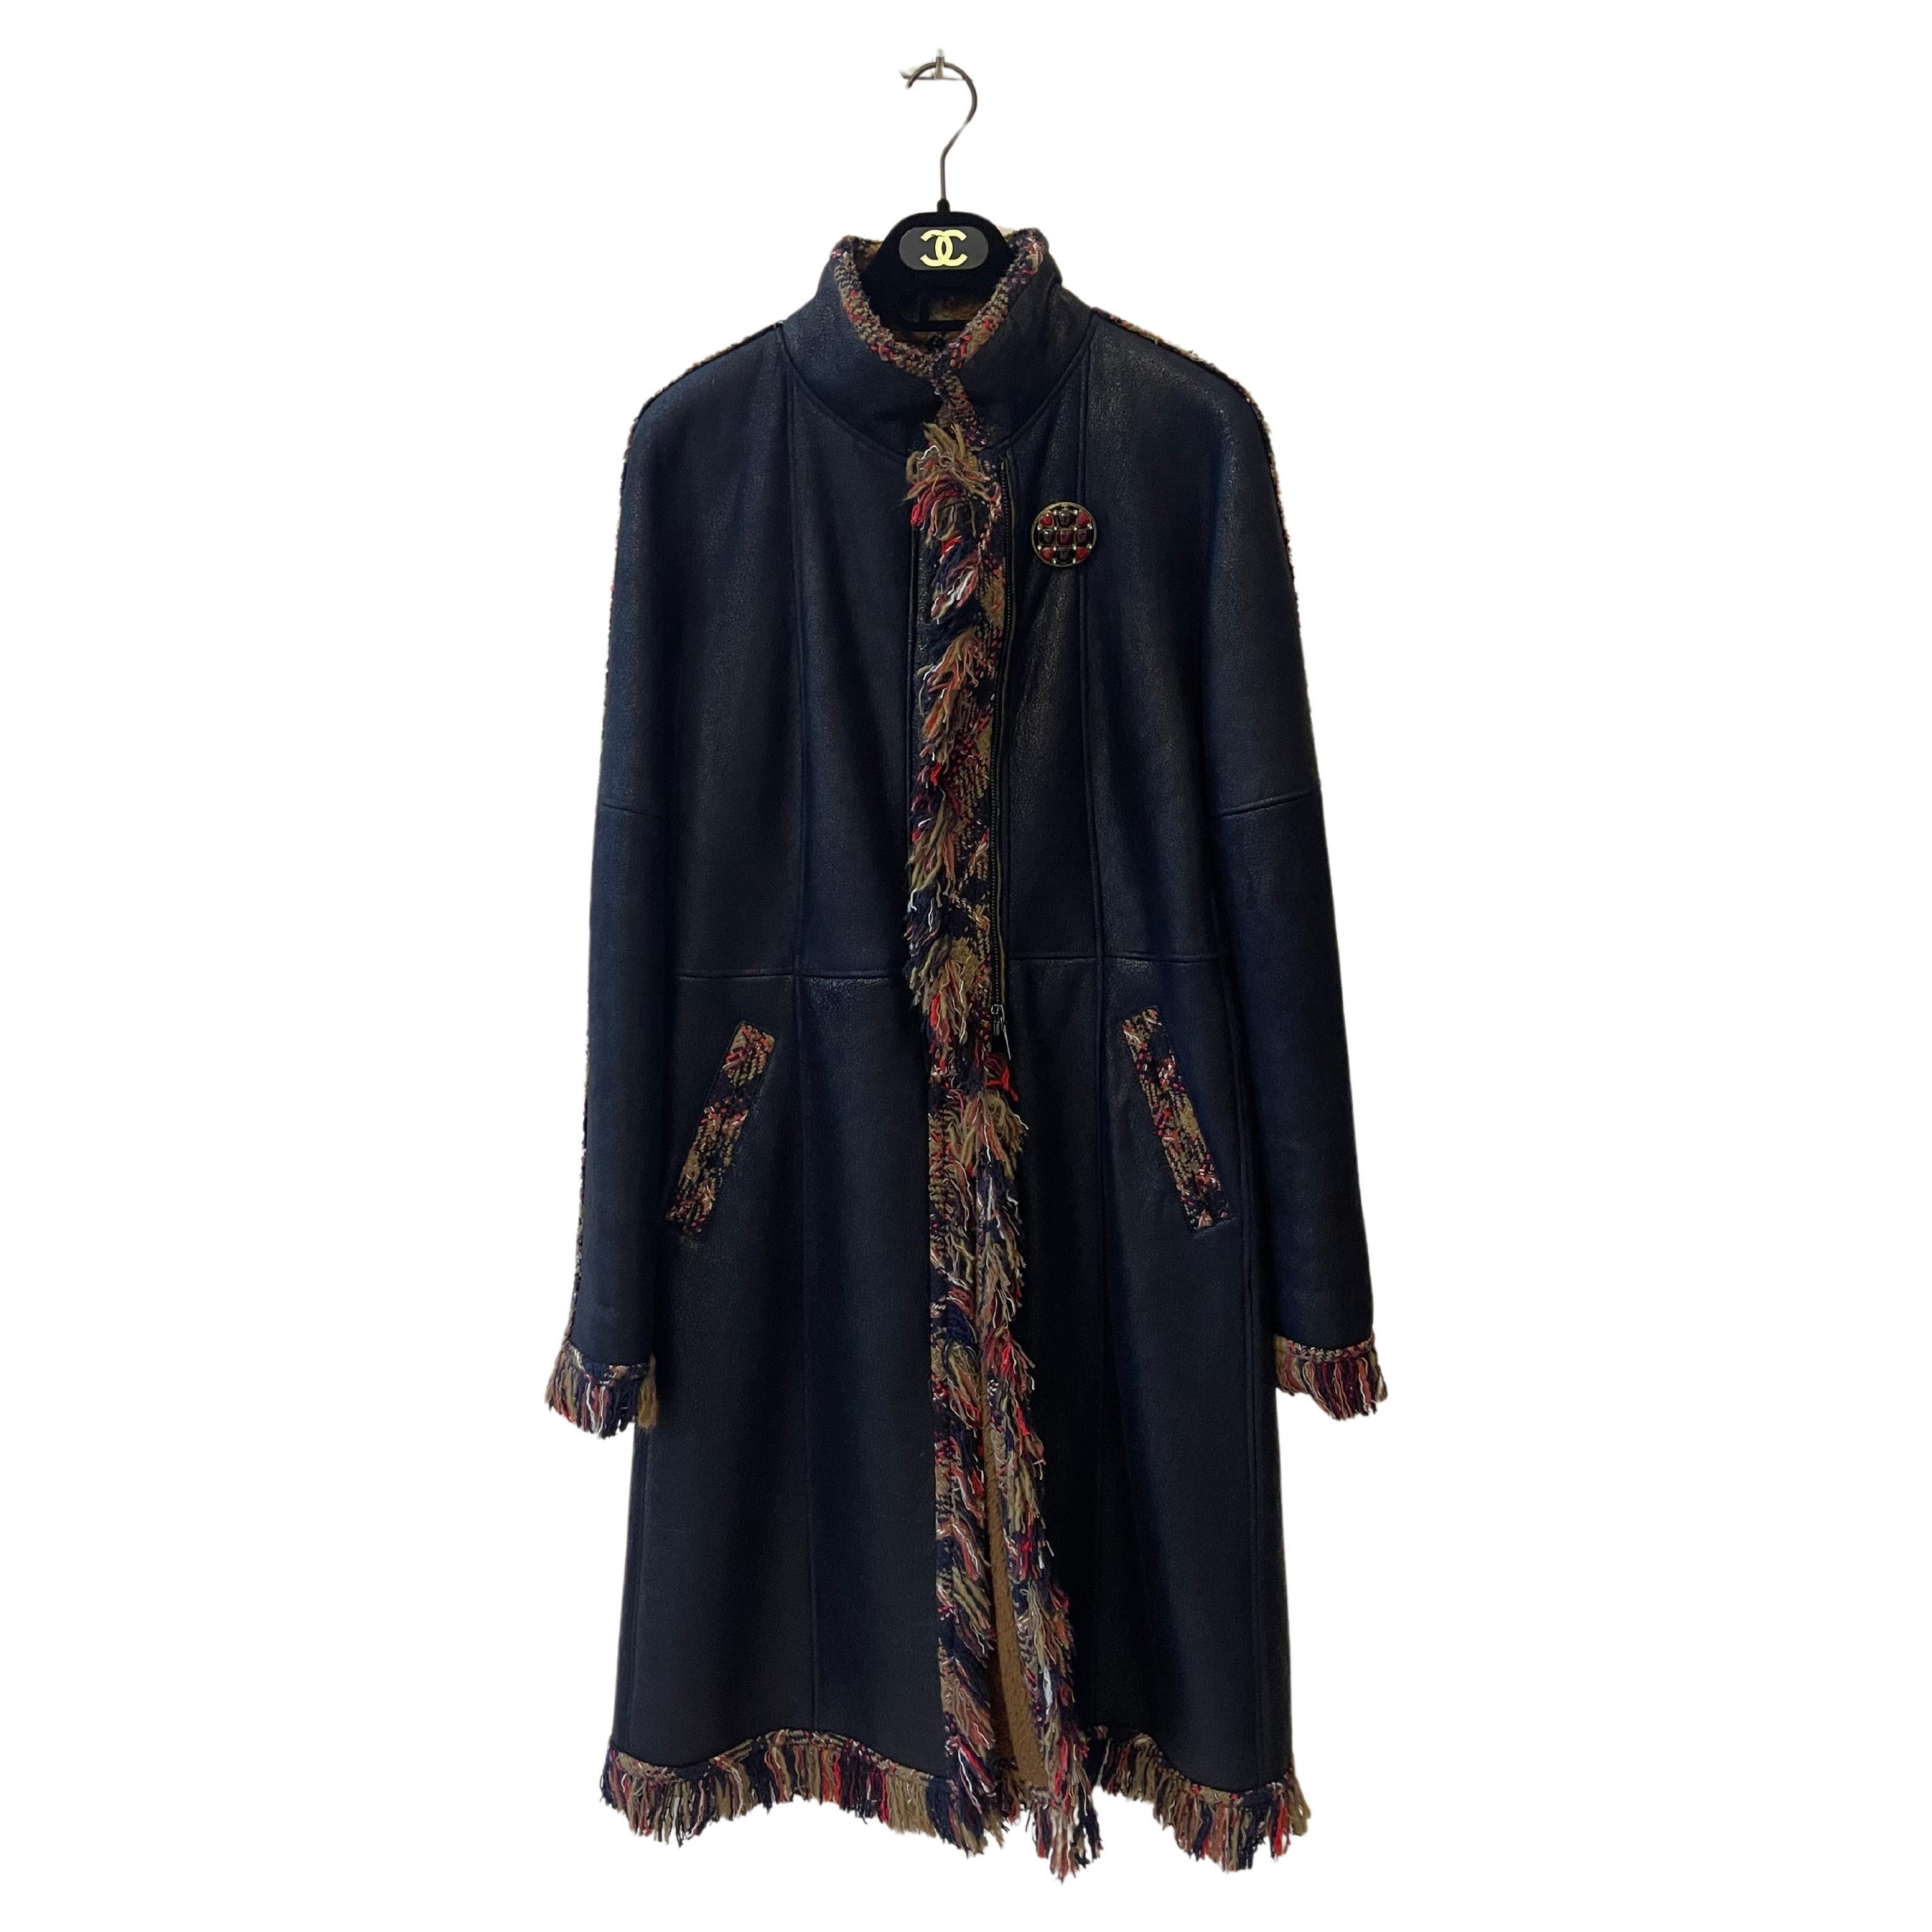 Unique 2013 CHANEL Edinburg Collection Tweed Shearling Coat For Sale